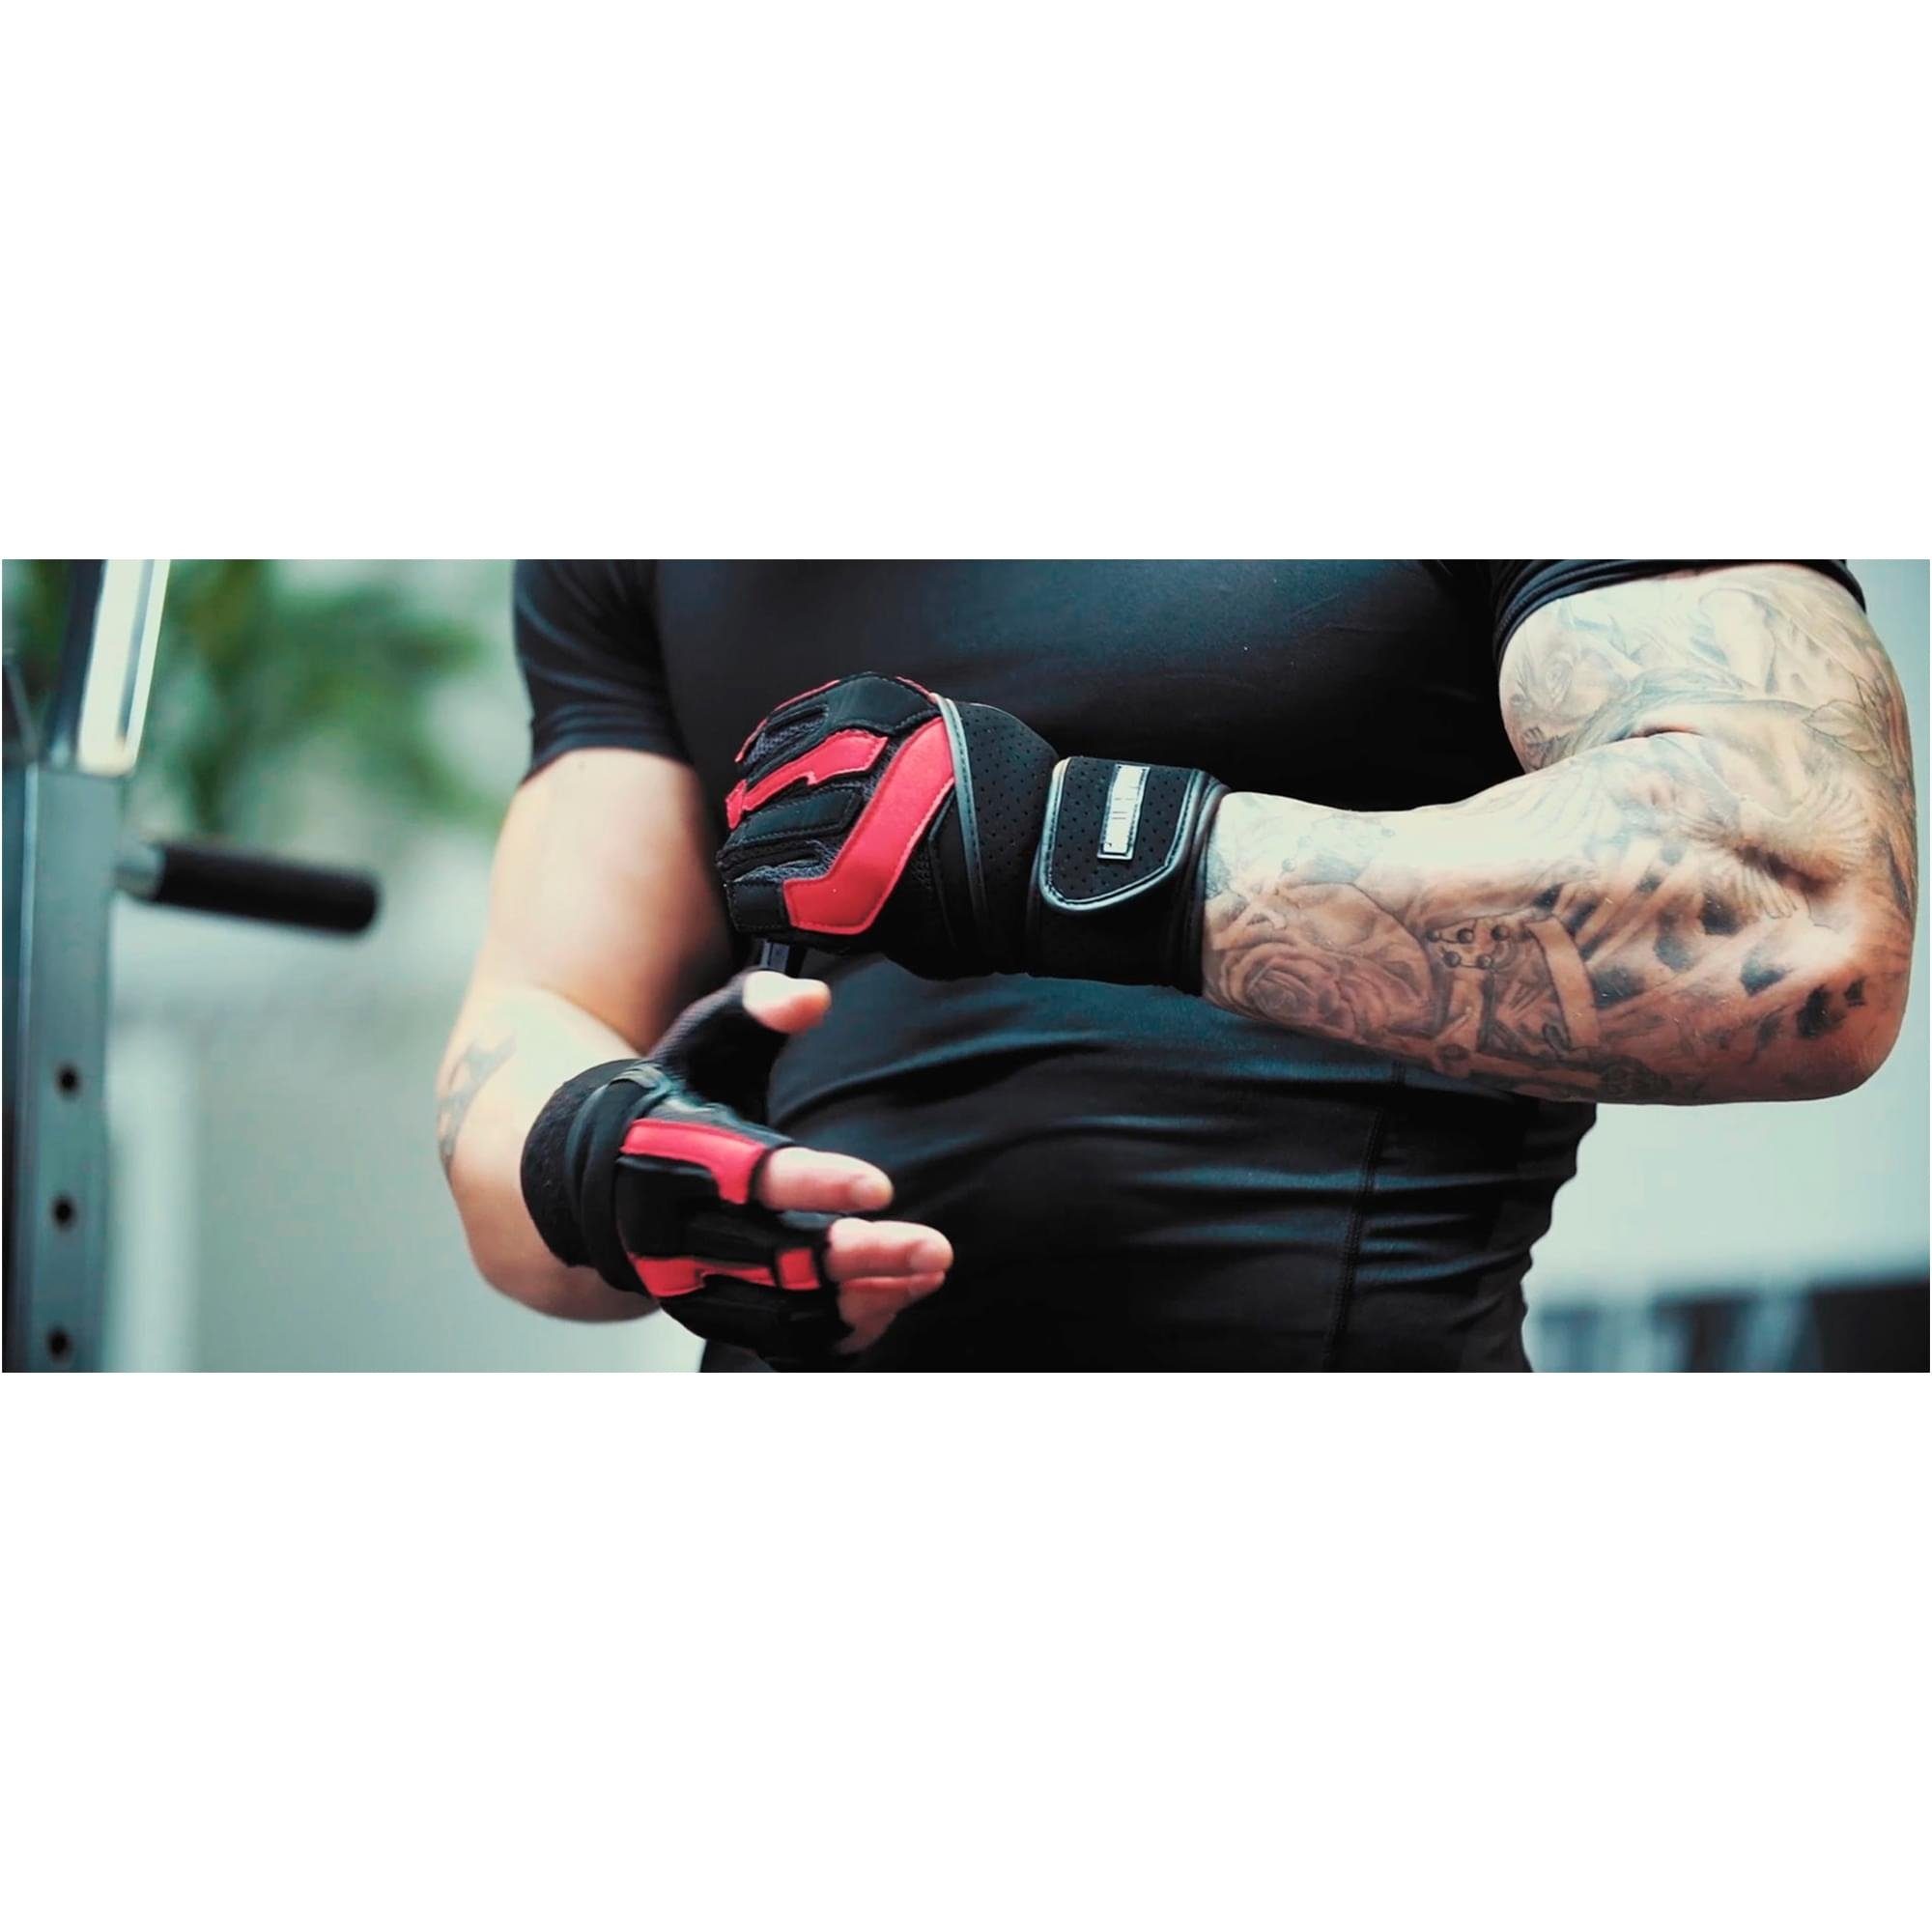 Trainingshandschuhe SPORTS Fitness Handschuhe mit Handgelenkstütze, - GORILLA Sporthandschuhe Leder,